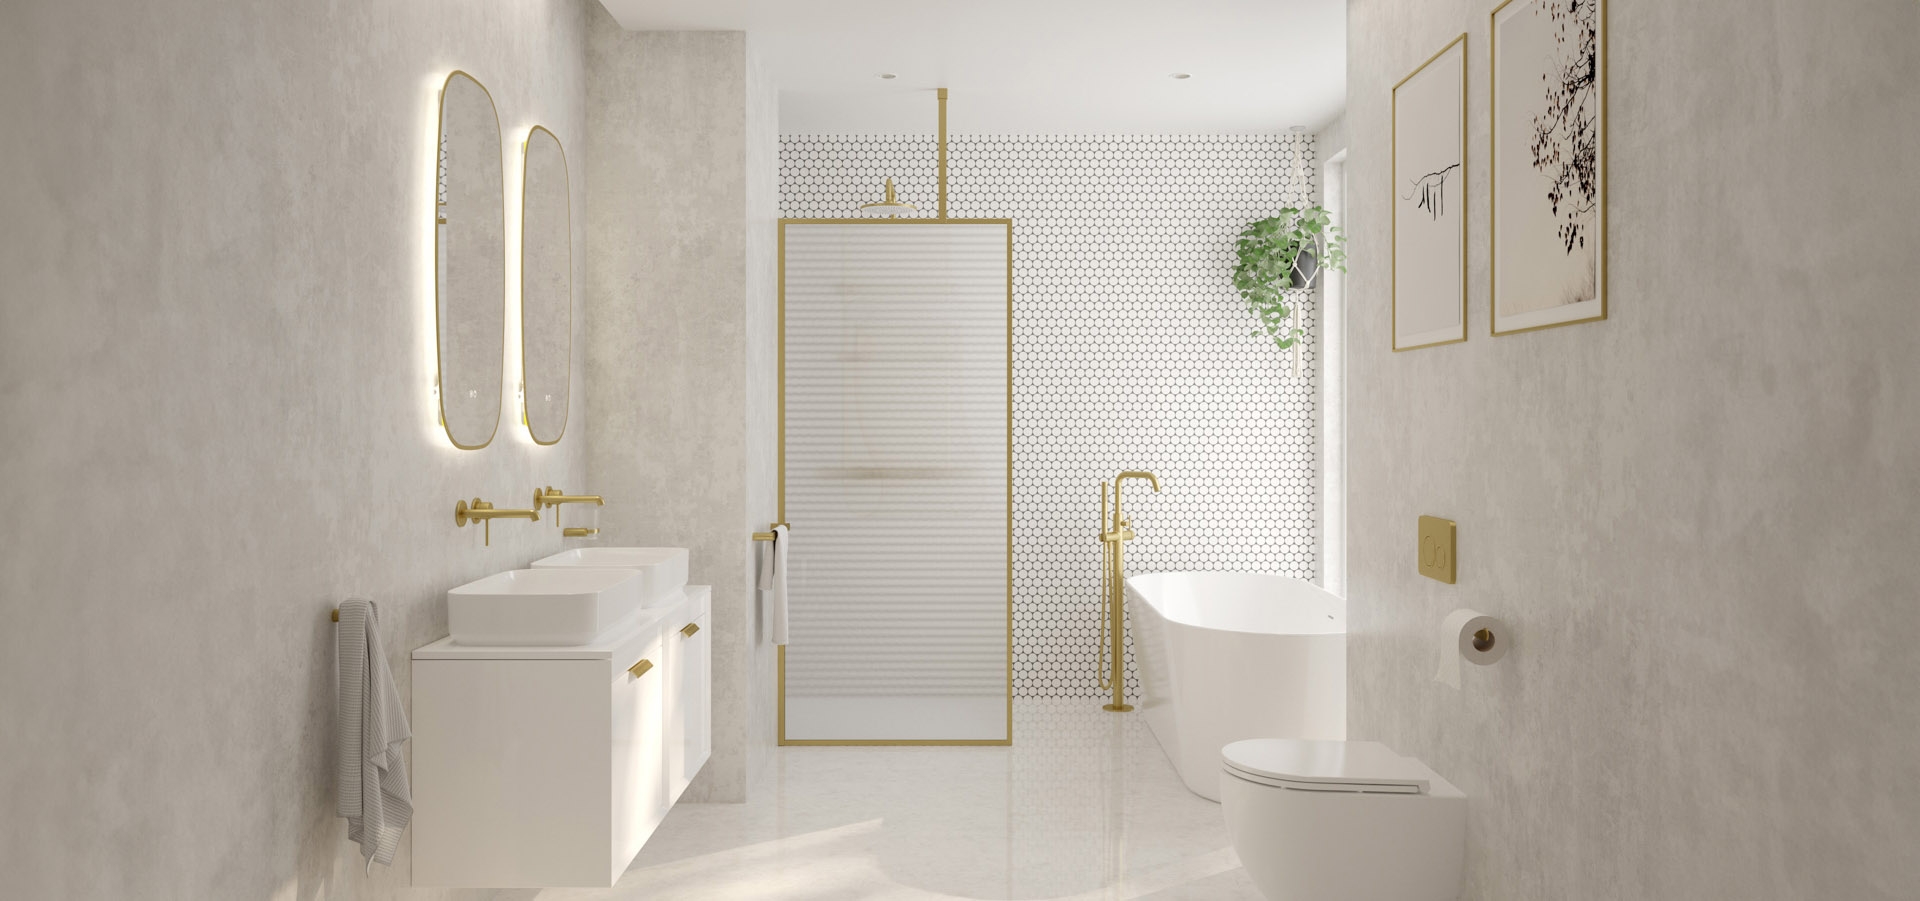 SONAS Bathrooms - Bathrooms Reimagined